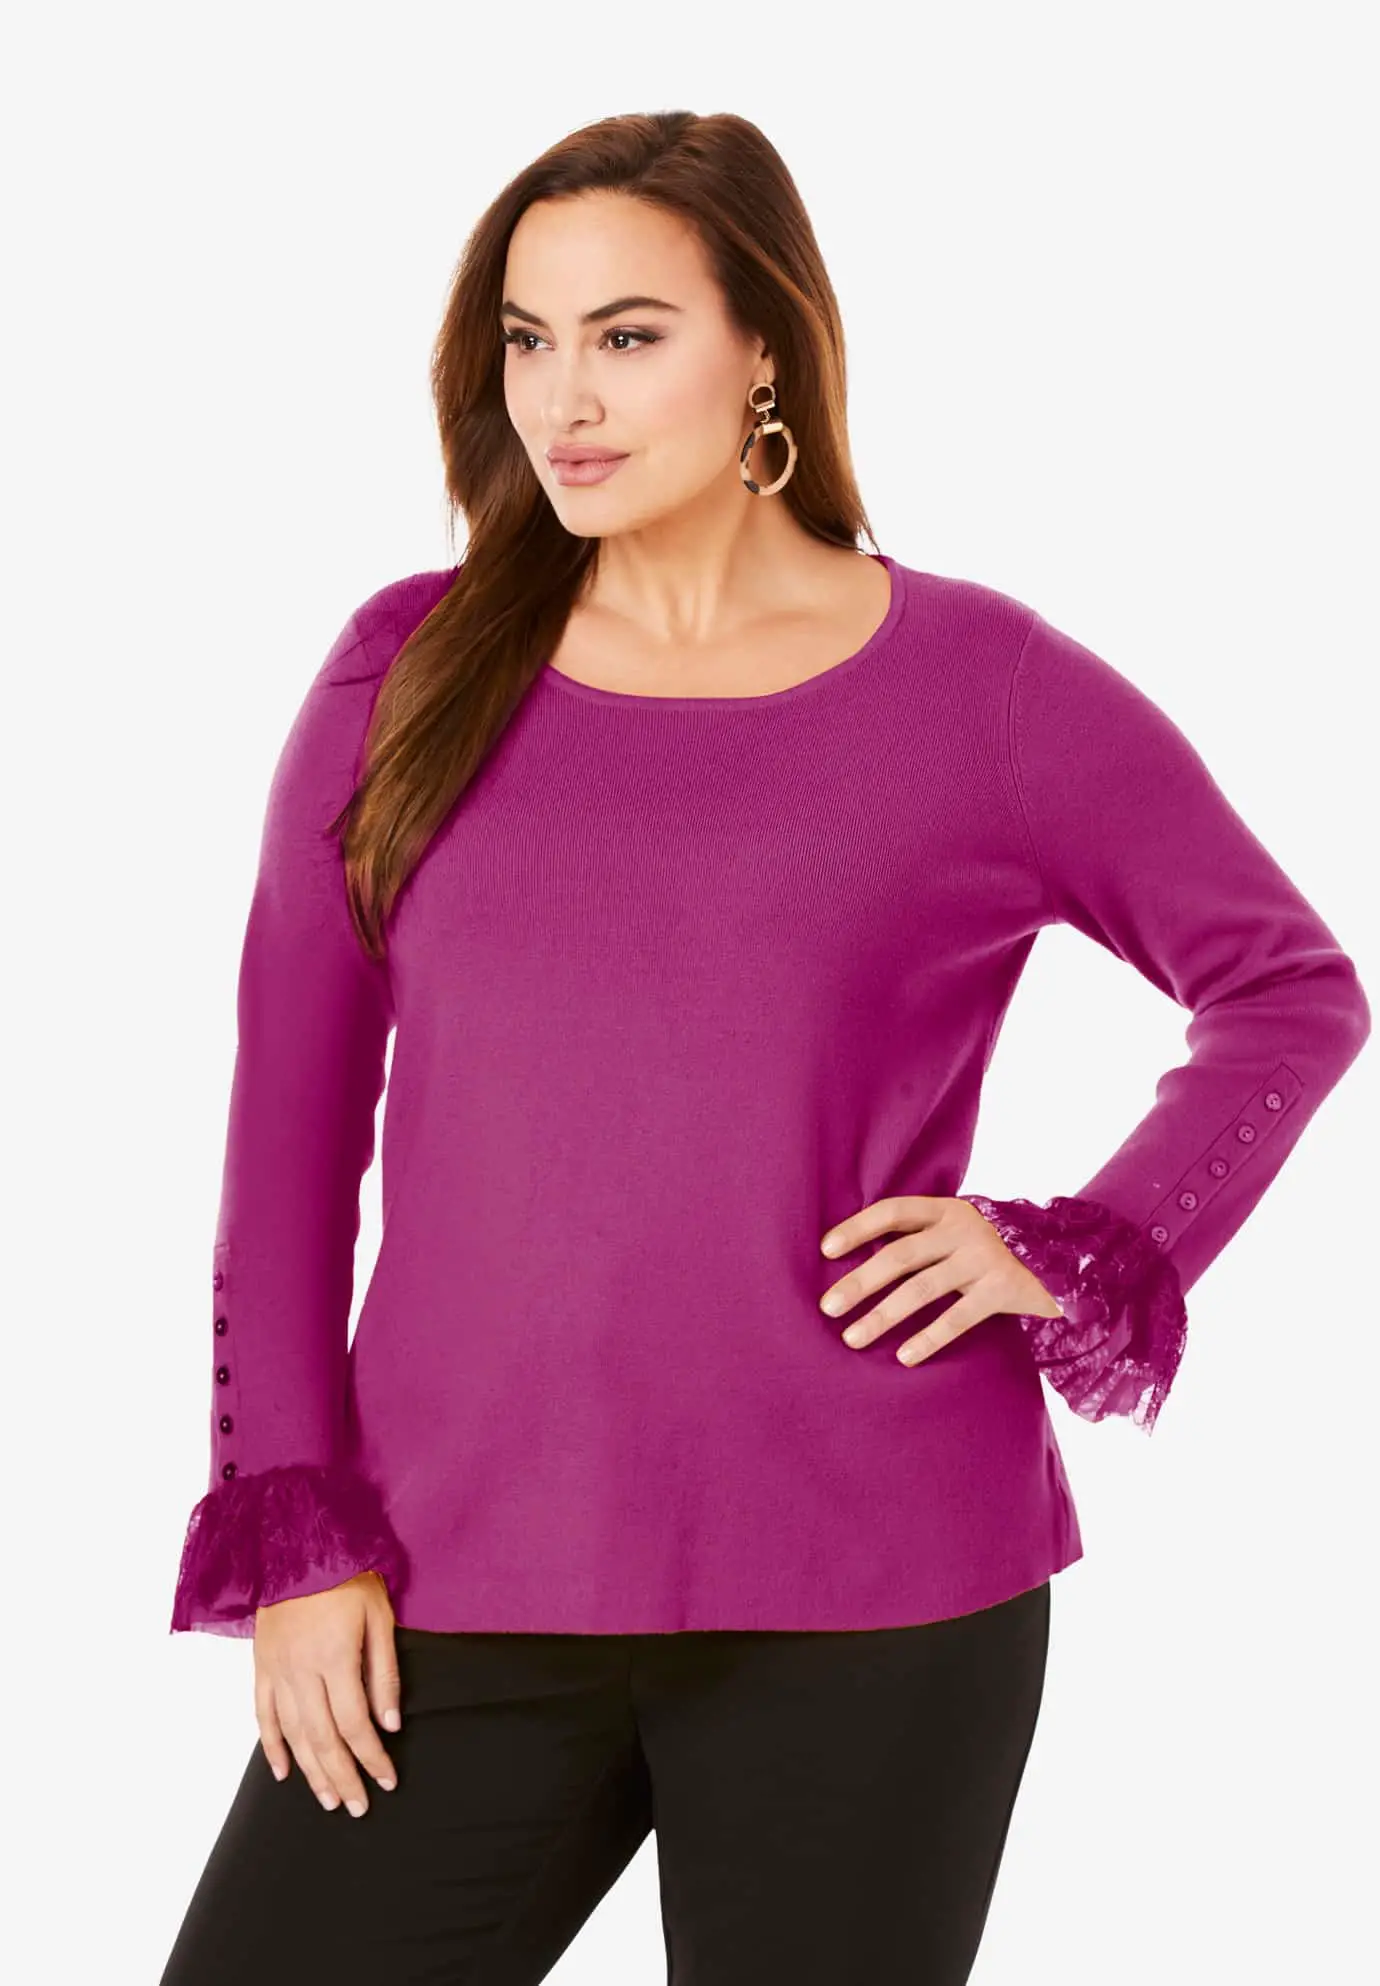 Plus Size Nylon Sweater 10